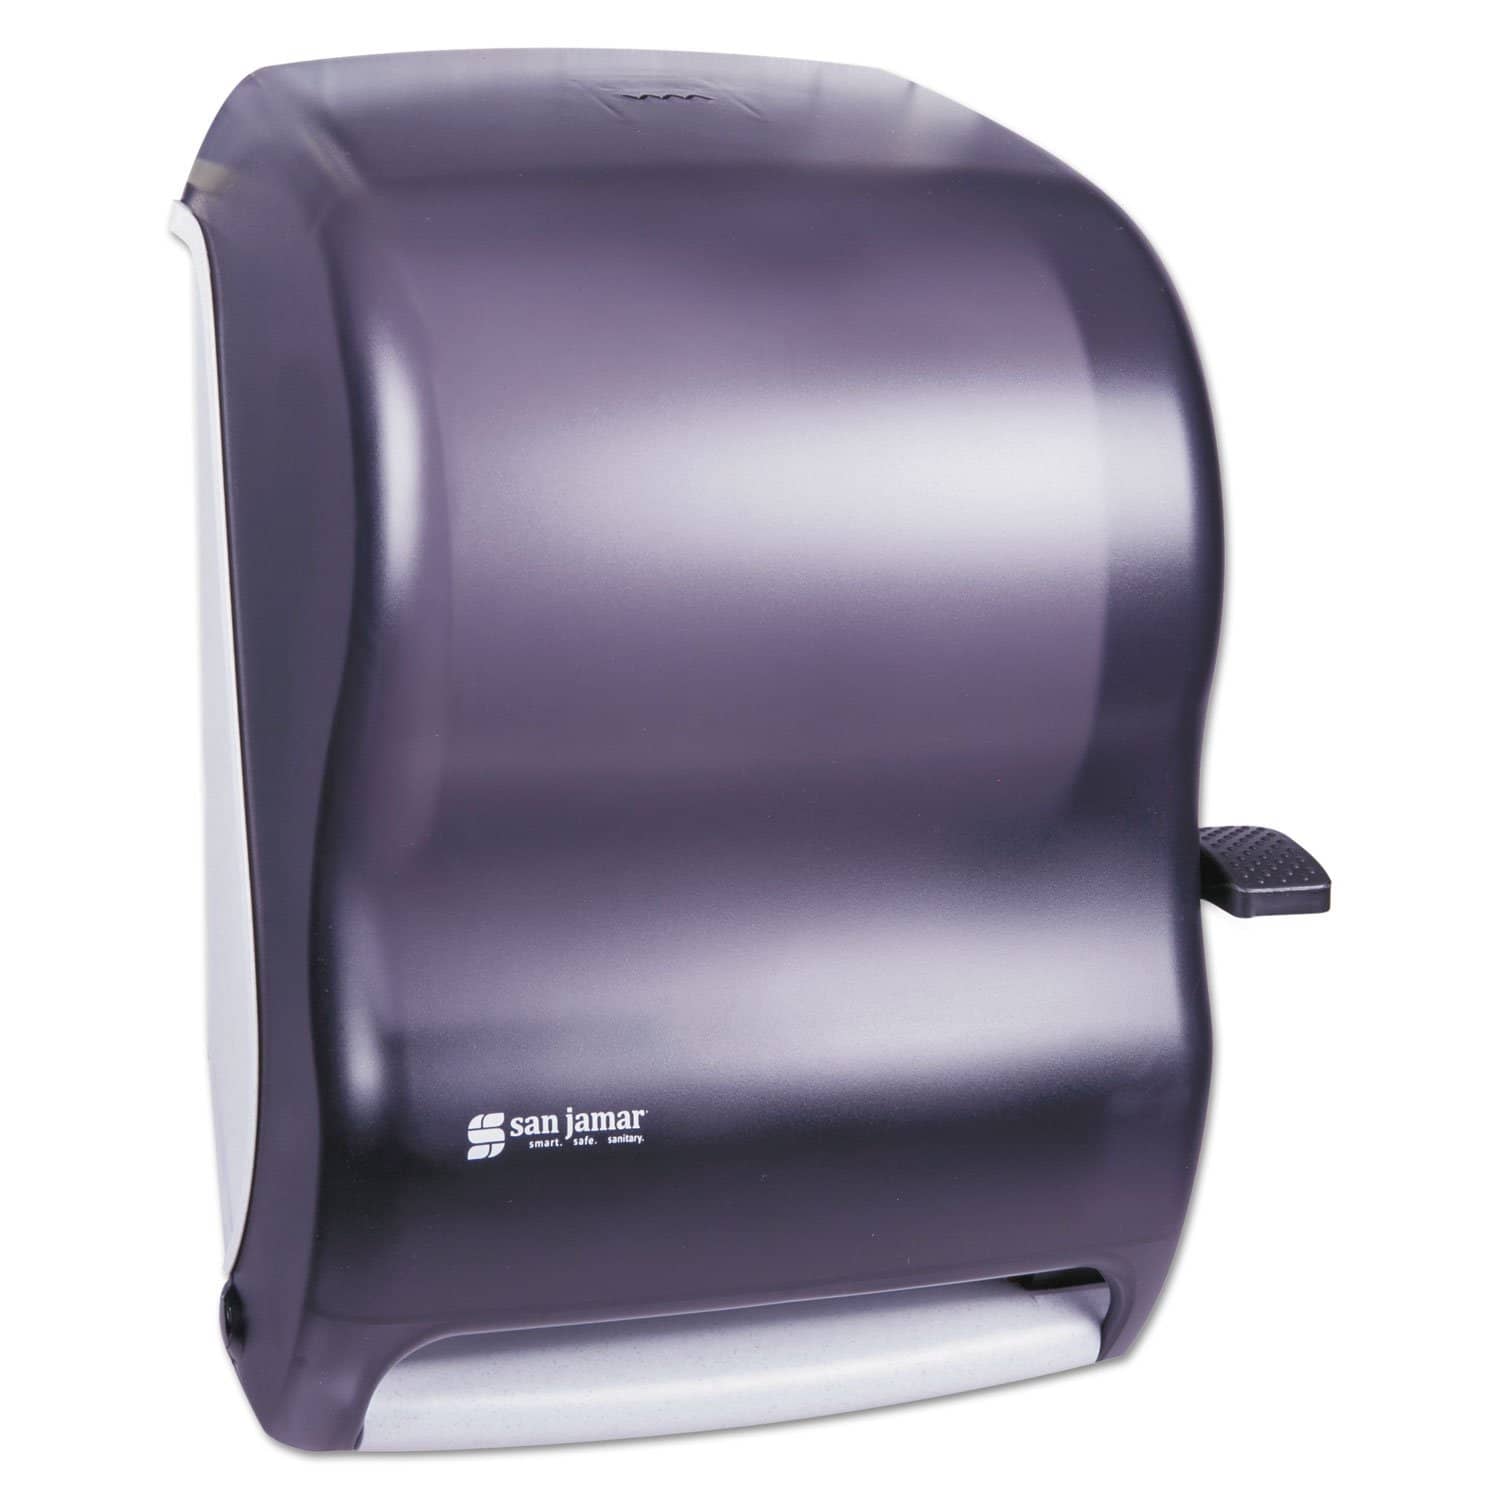 San Jamar Lever Roll Towel Dispenser, Classic, Black Pearl, 12 15/16 X 9 1/4 X 16 1/2 - SJMT1100TBK - TotalRestroom.com